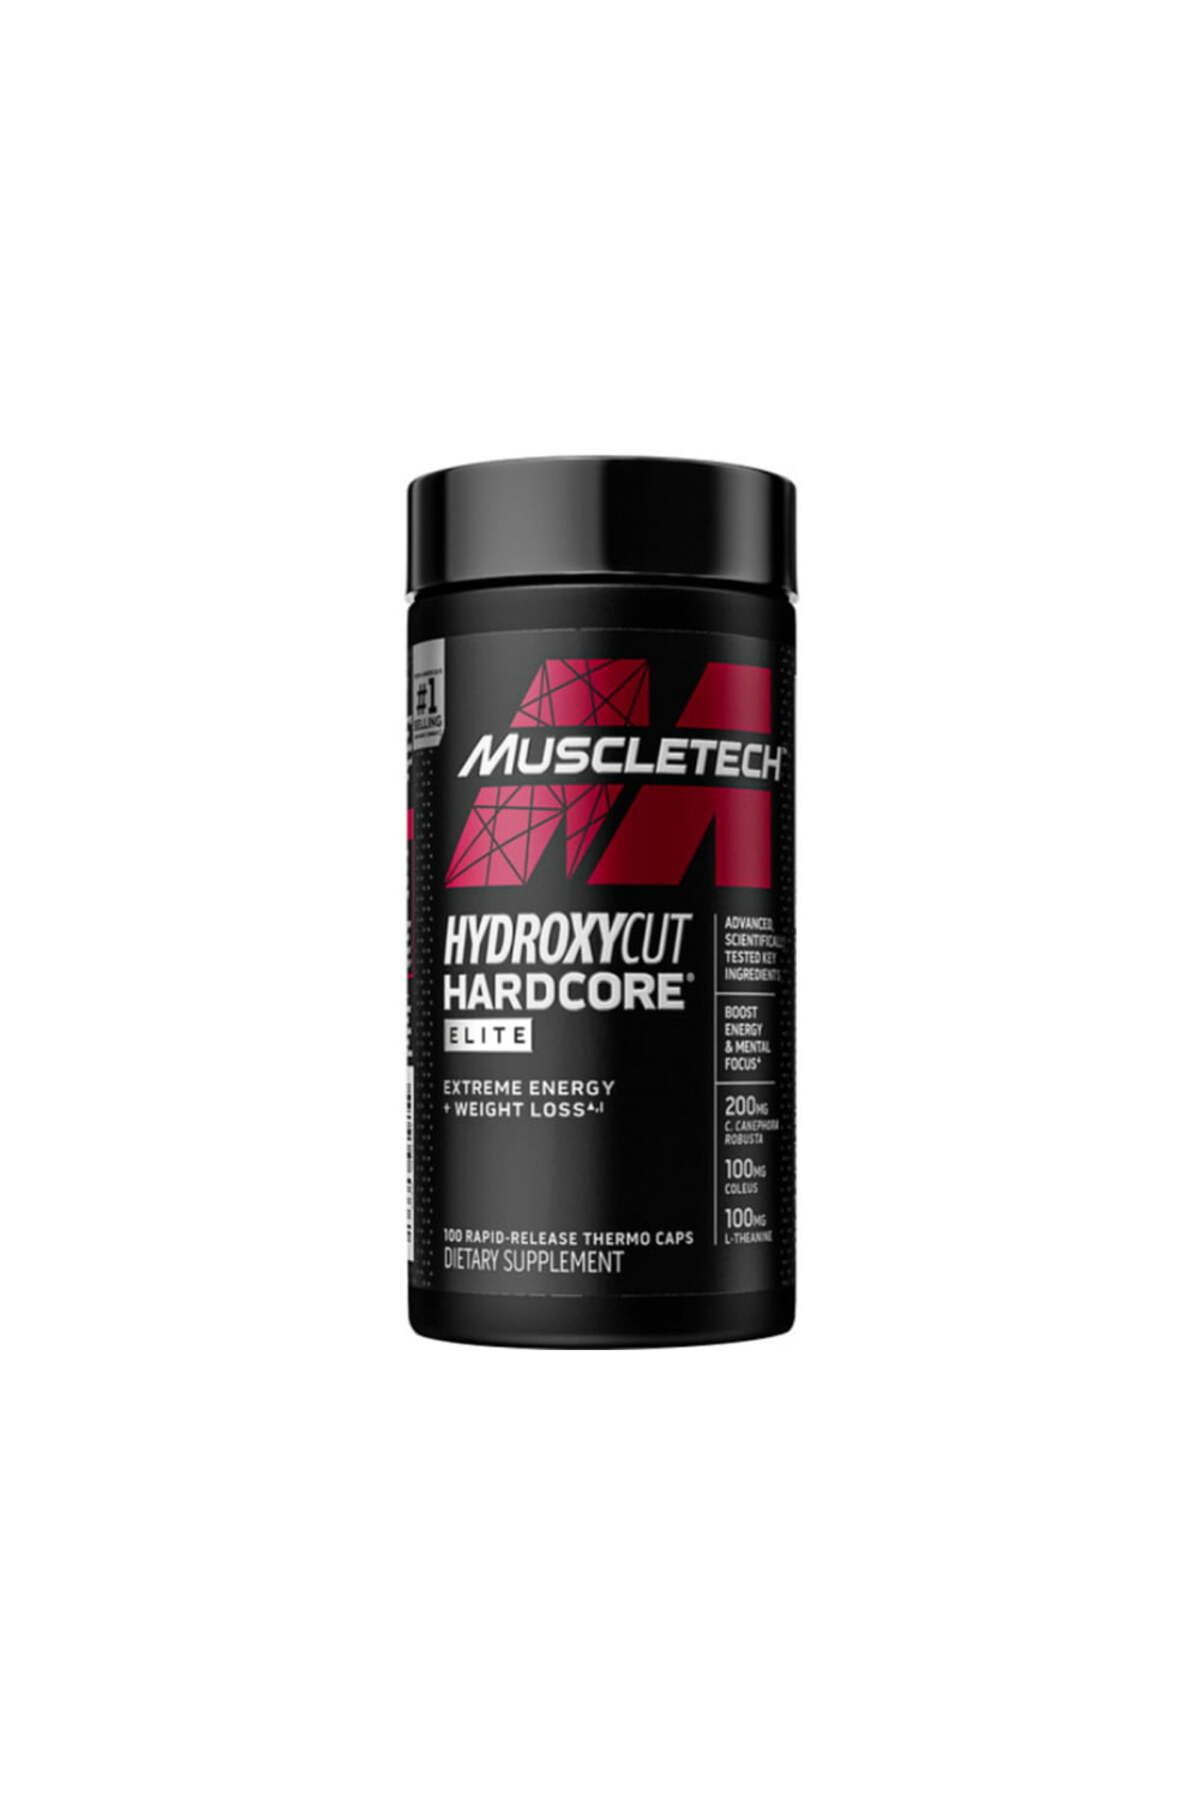 Muscletech Hydroxycut Hardcore Elite fat burner / 100 Caps